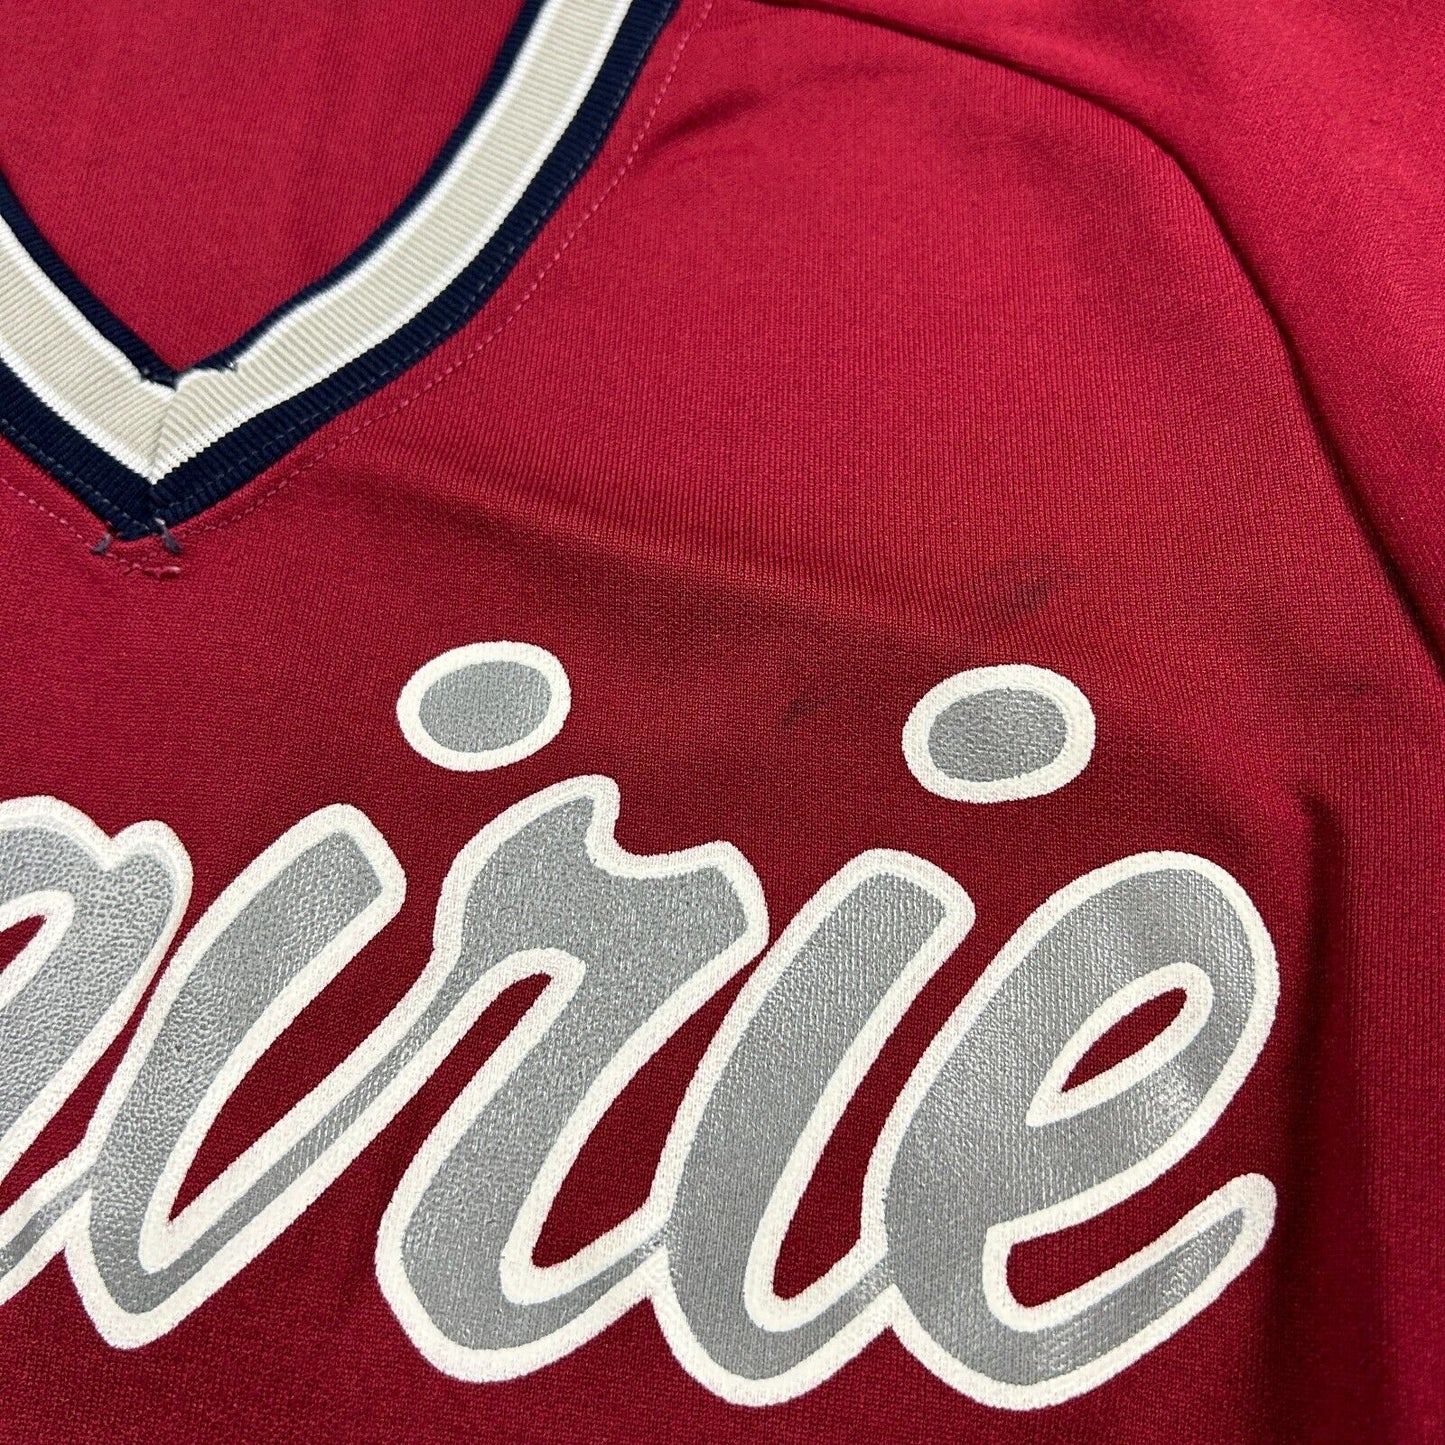 VINTAGE | Prairie # 1 Champion Baseball Jersey sz S Adult